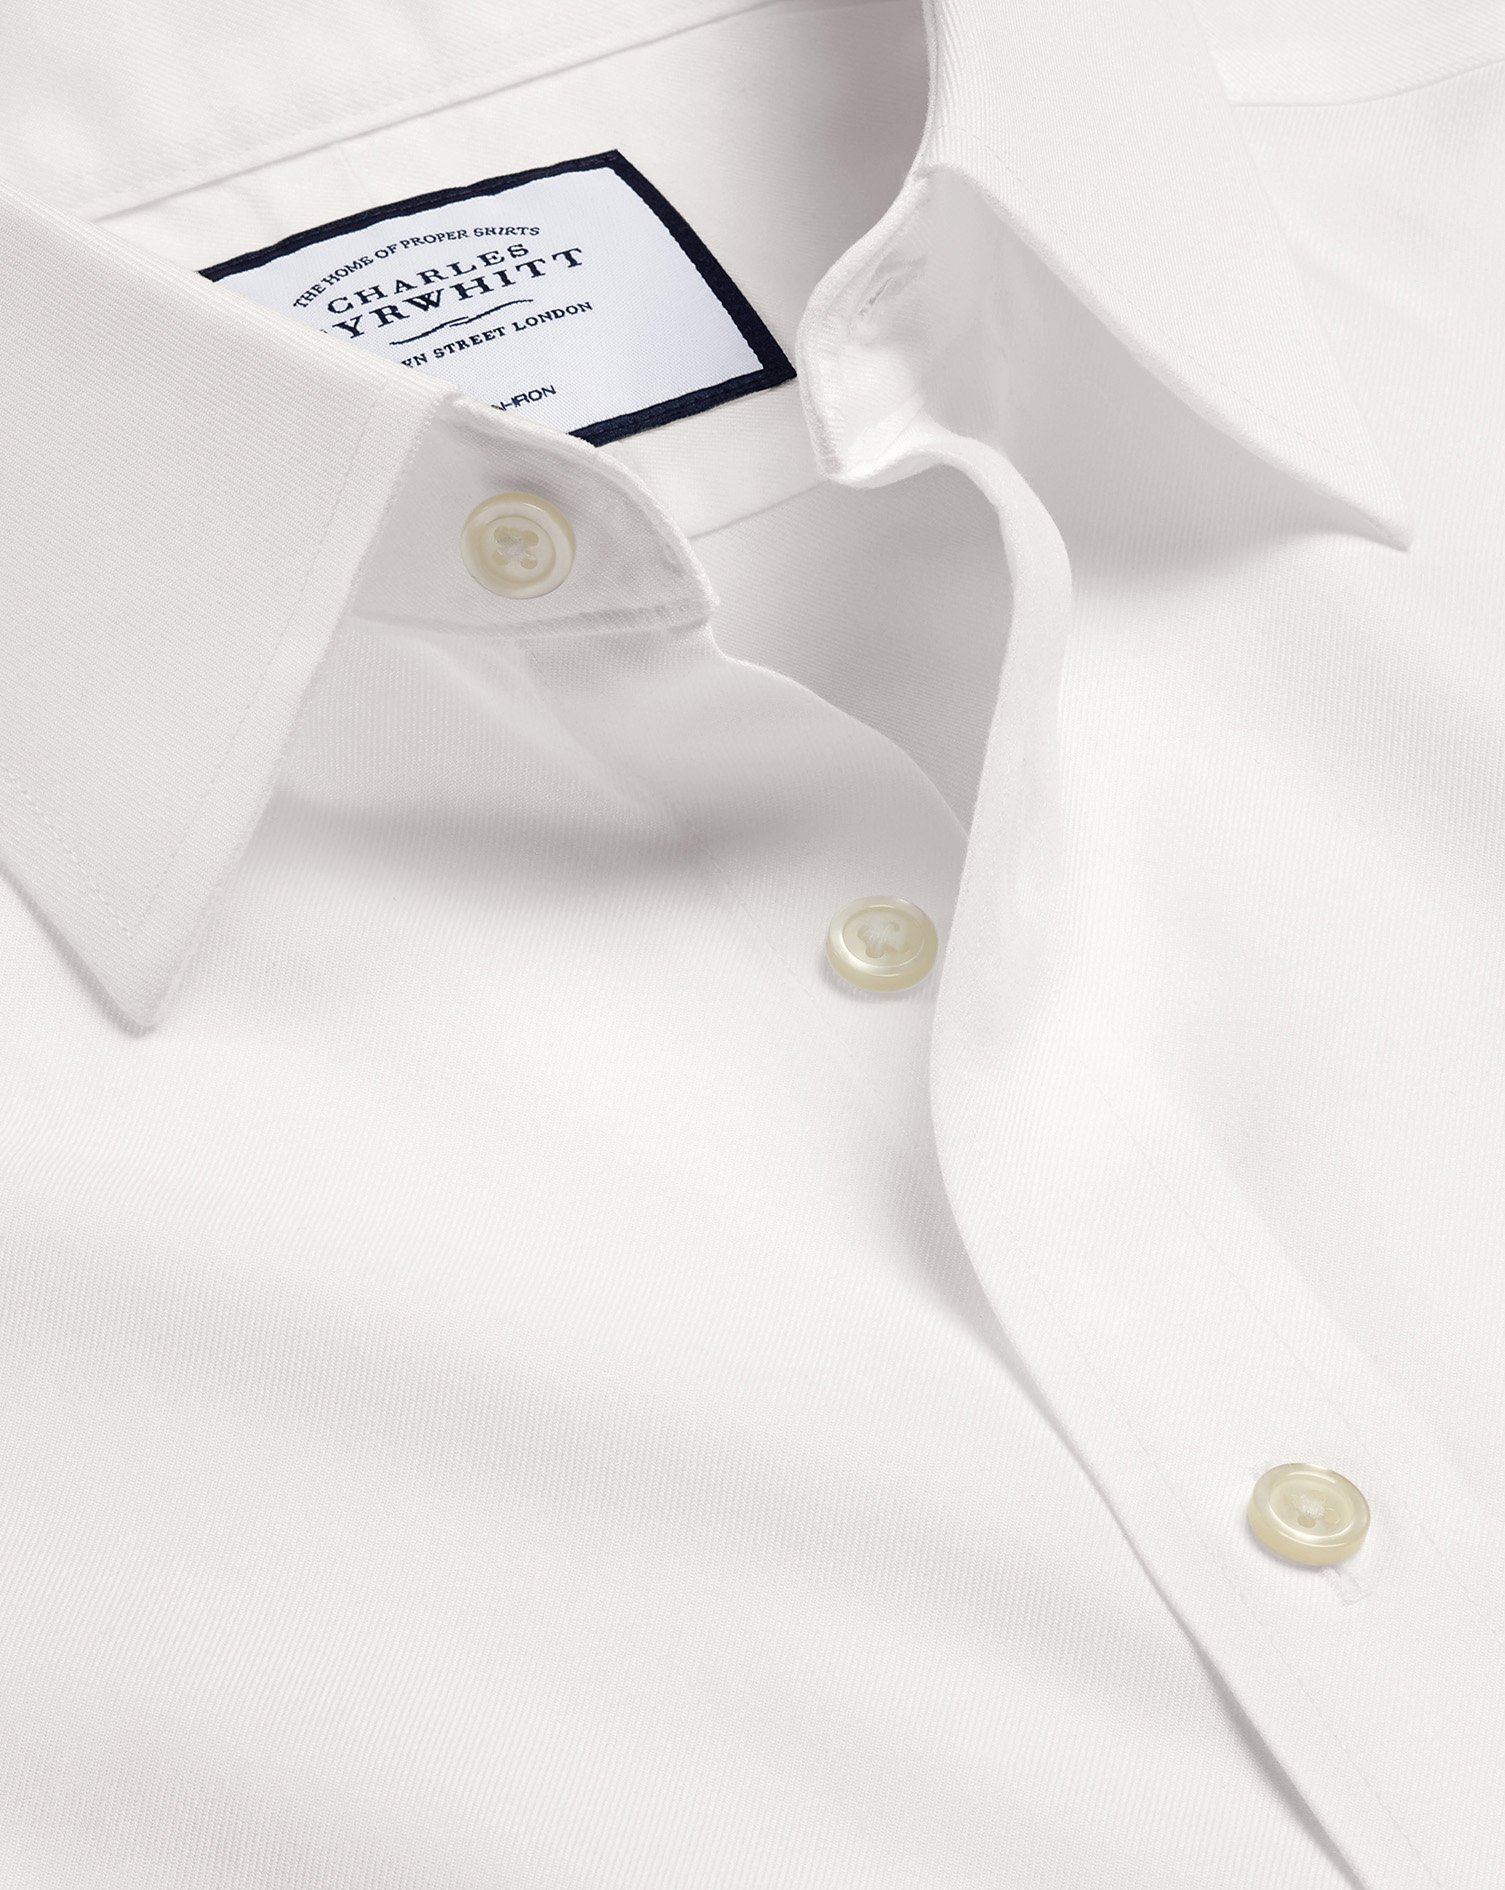 Men's Charles Tyrwhitt Non-Iron Twill Dress Shirt - Ivory White French Cuff Size Small Cotton
